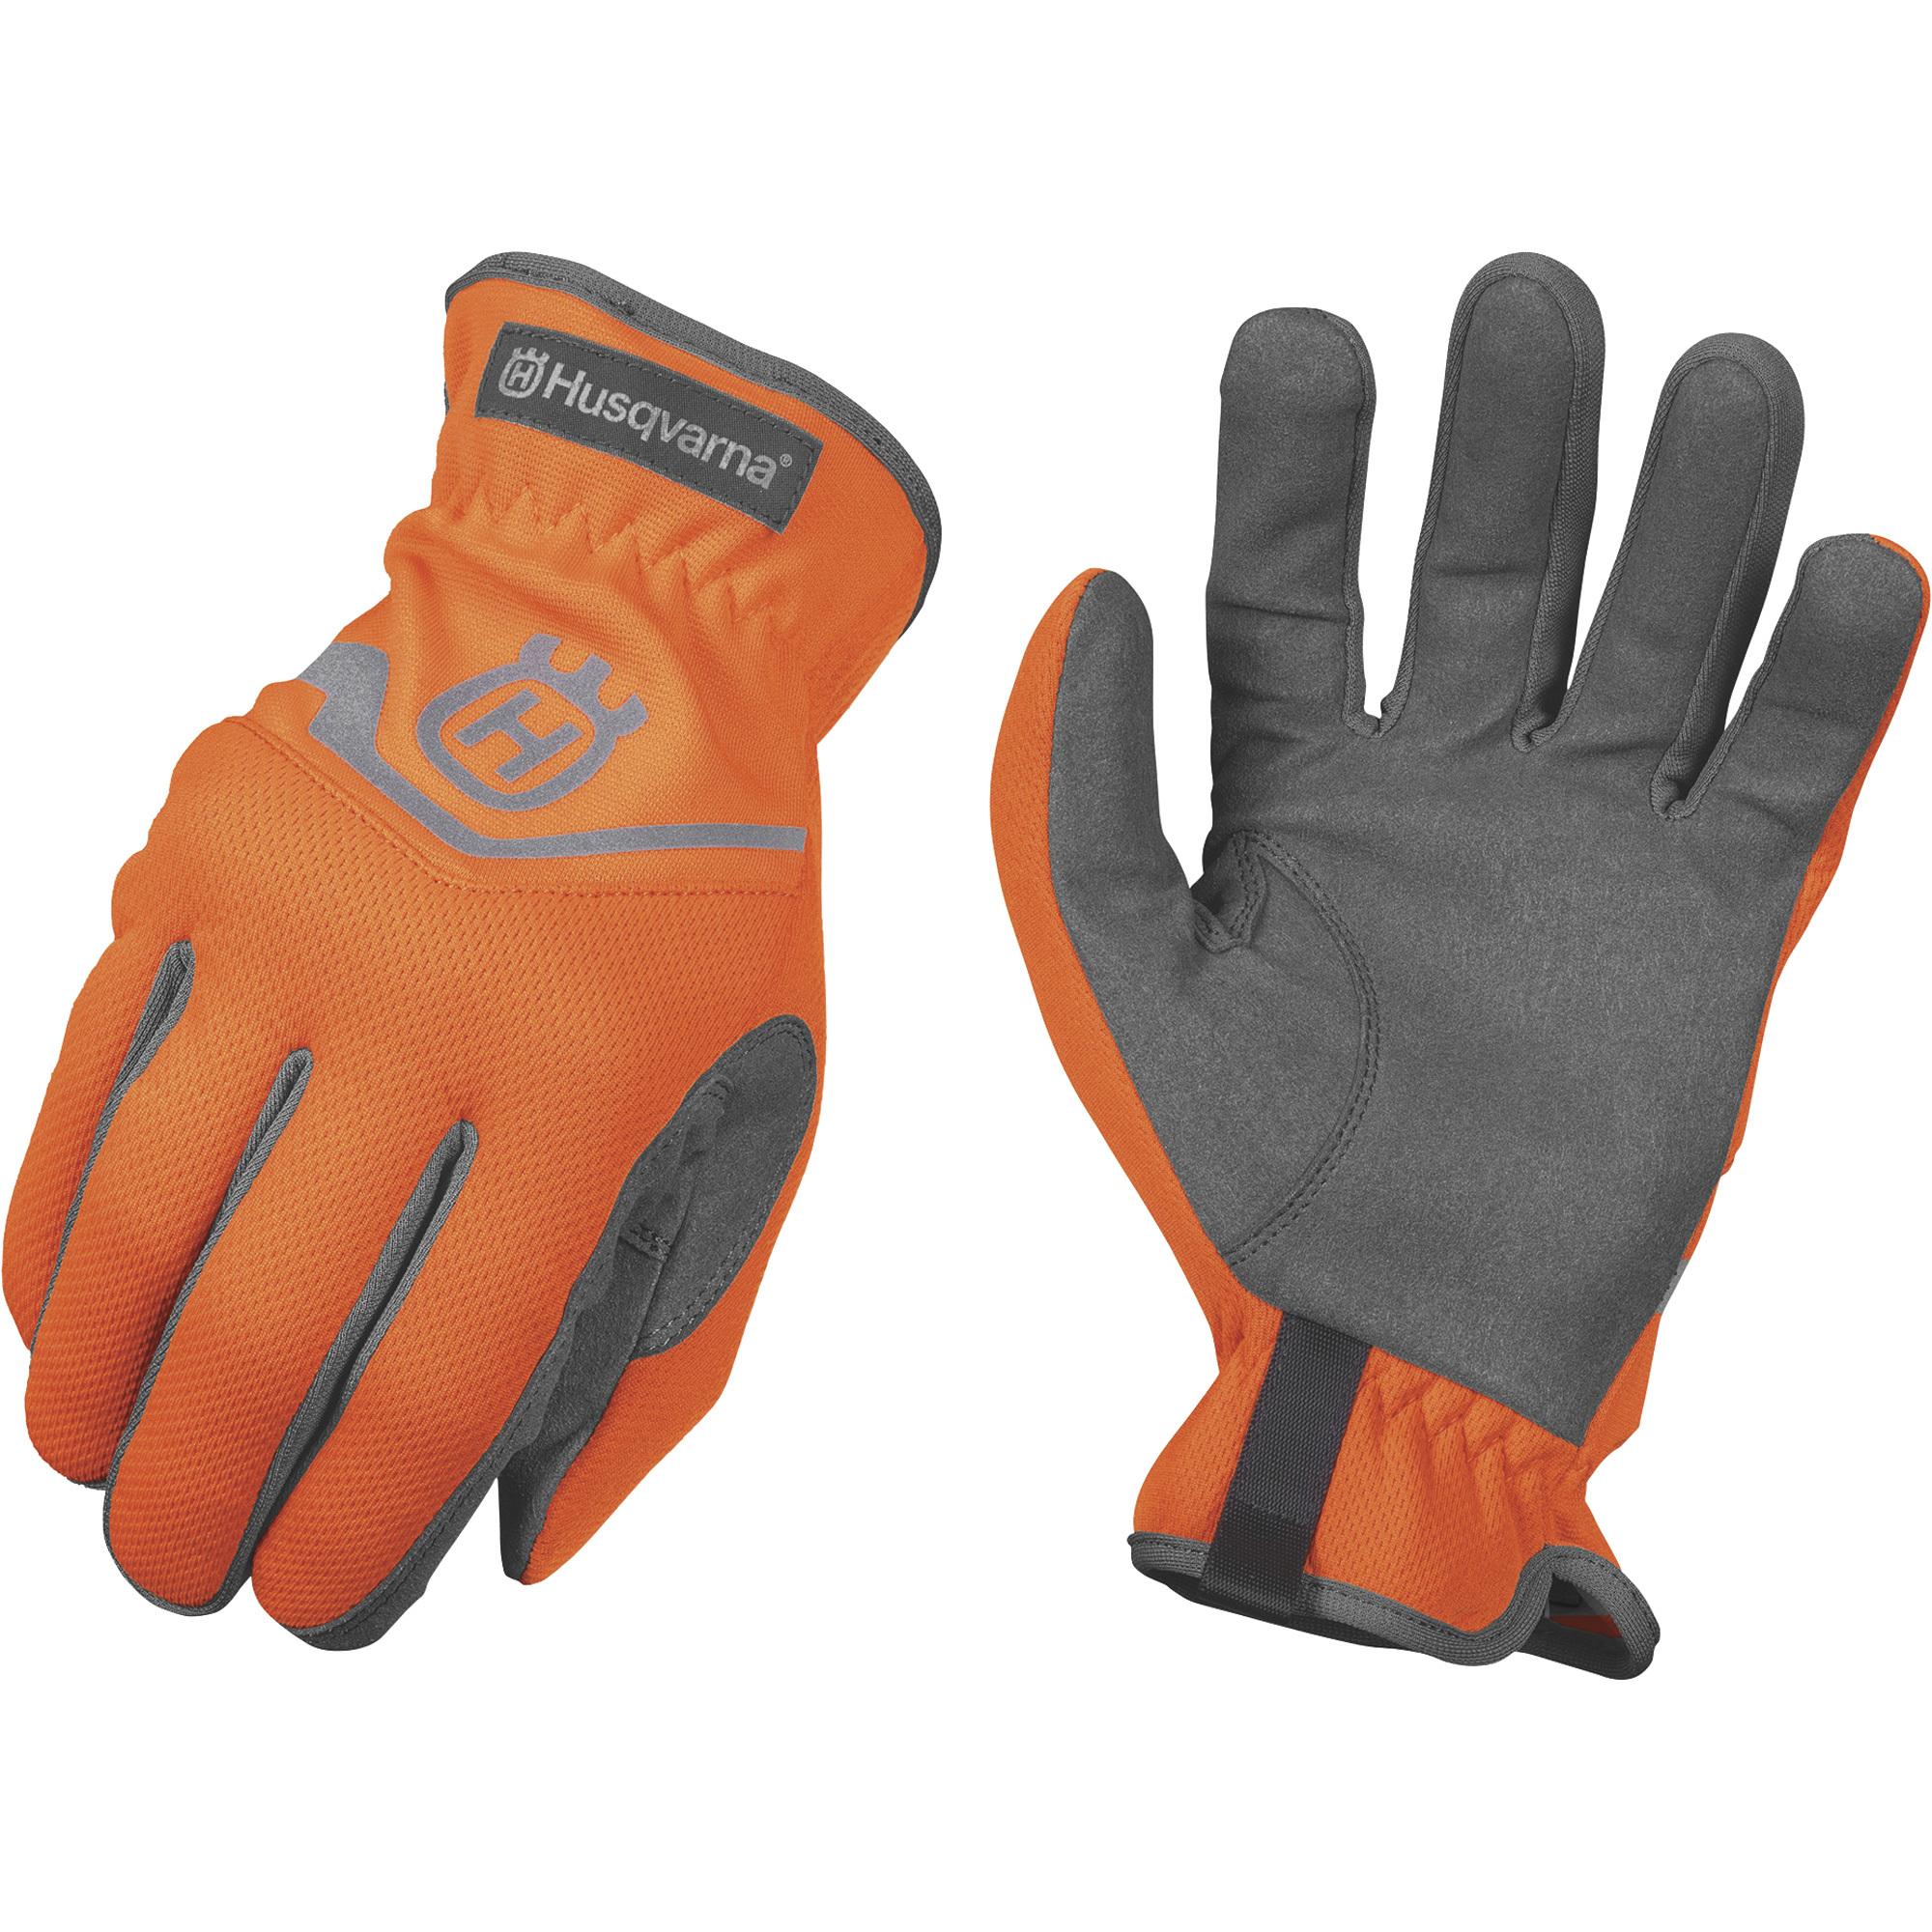 Husqvarna Classic Work Gloves âXL Size, Orange/Gray